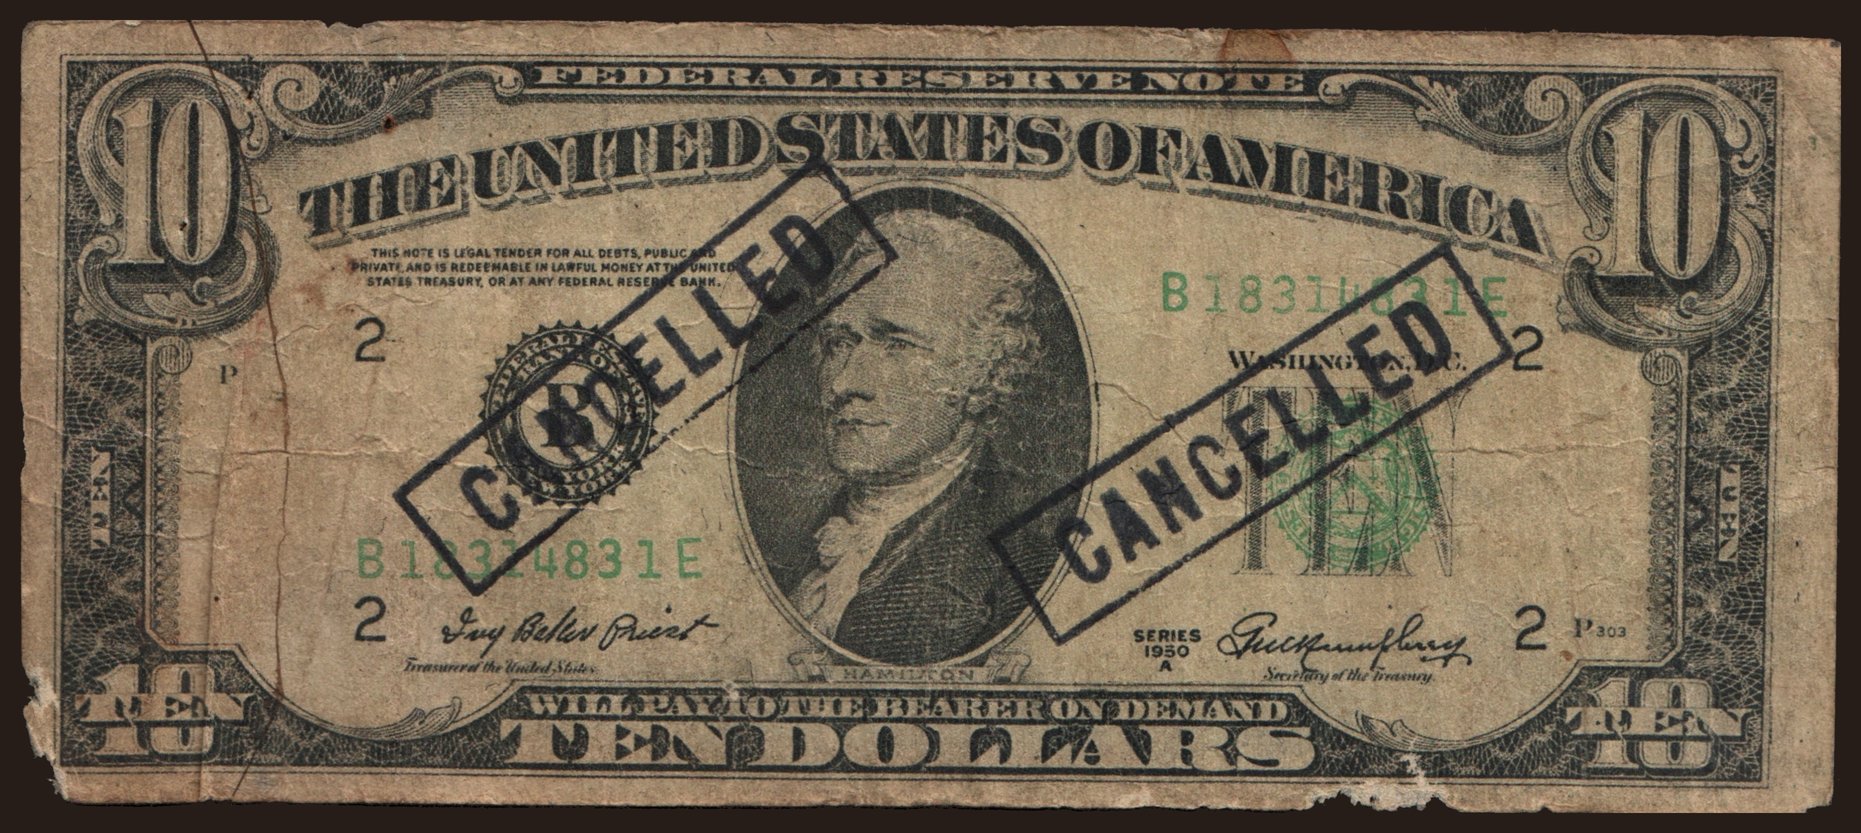 10 dollars, 1950, falsum